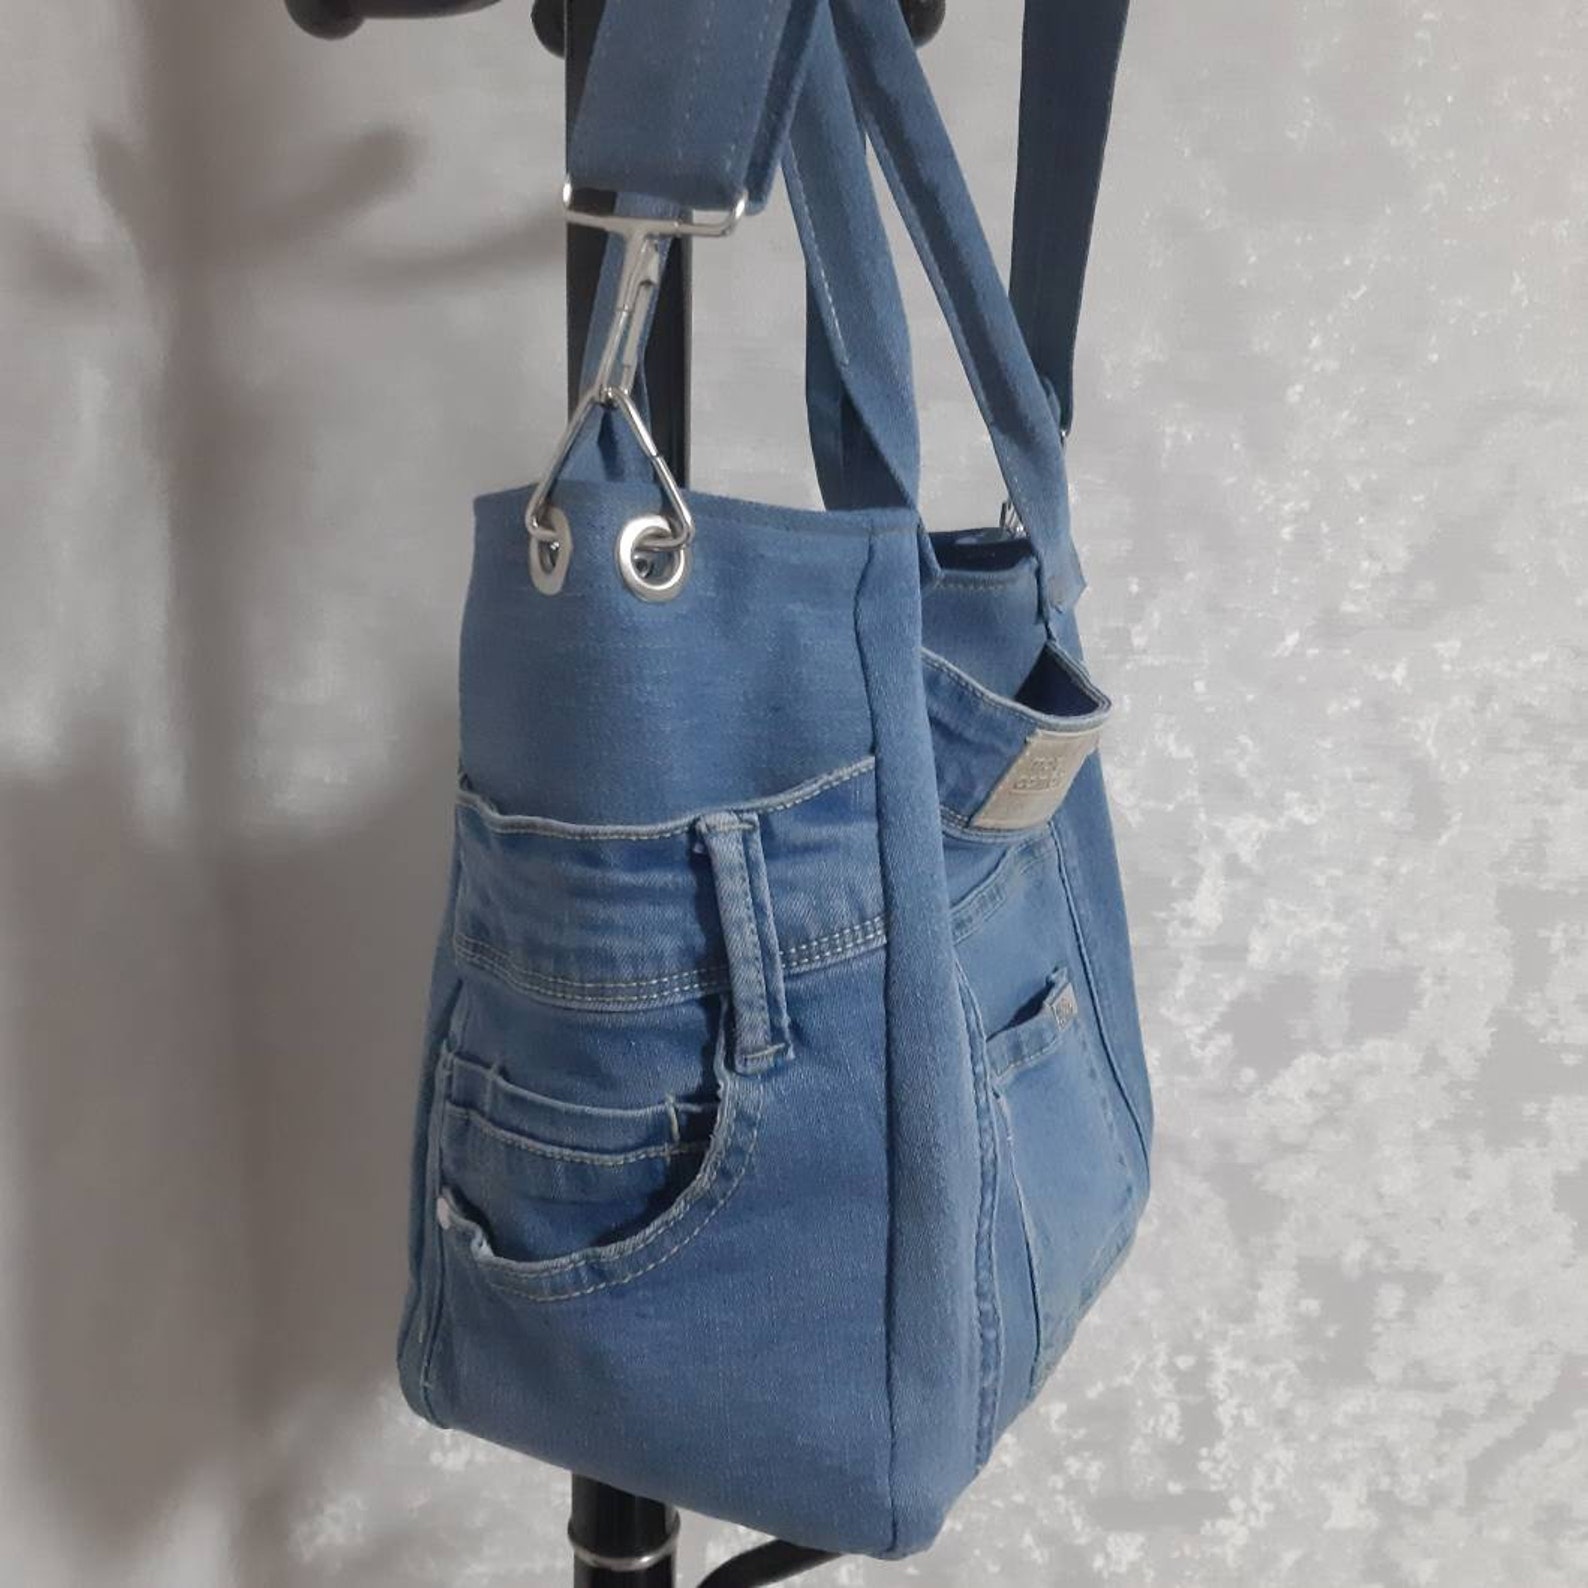 Casual denim bag medium size Jean top handles bag Crossbody | Etsy